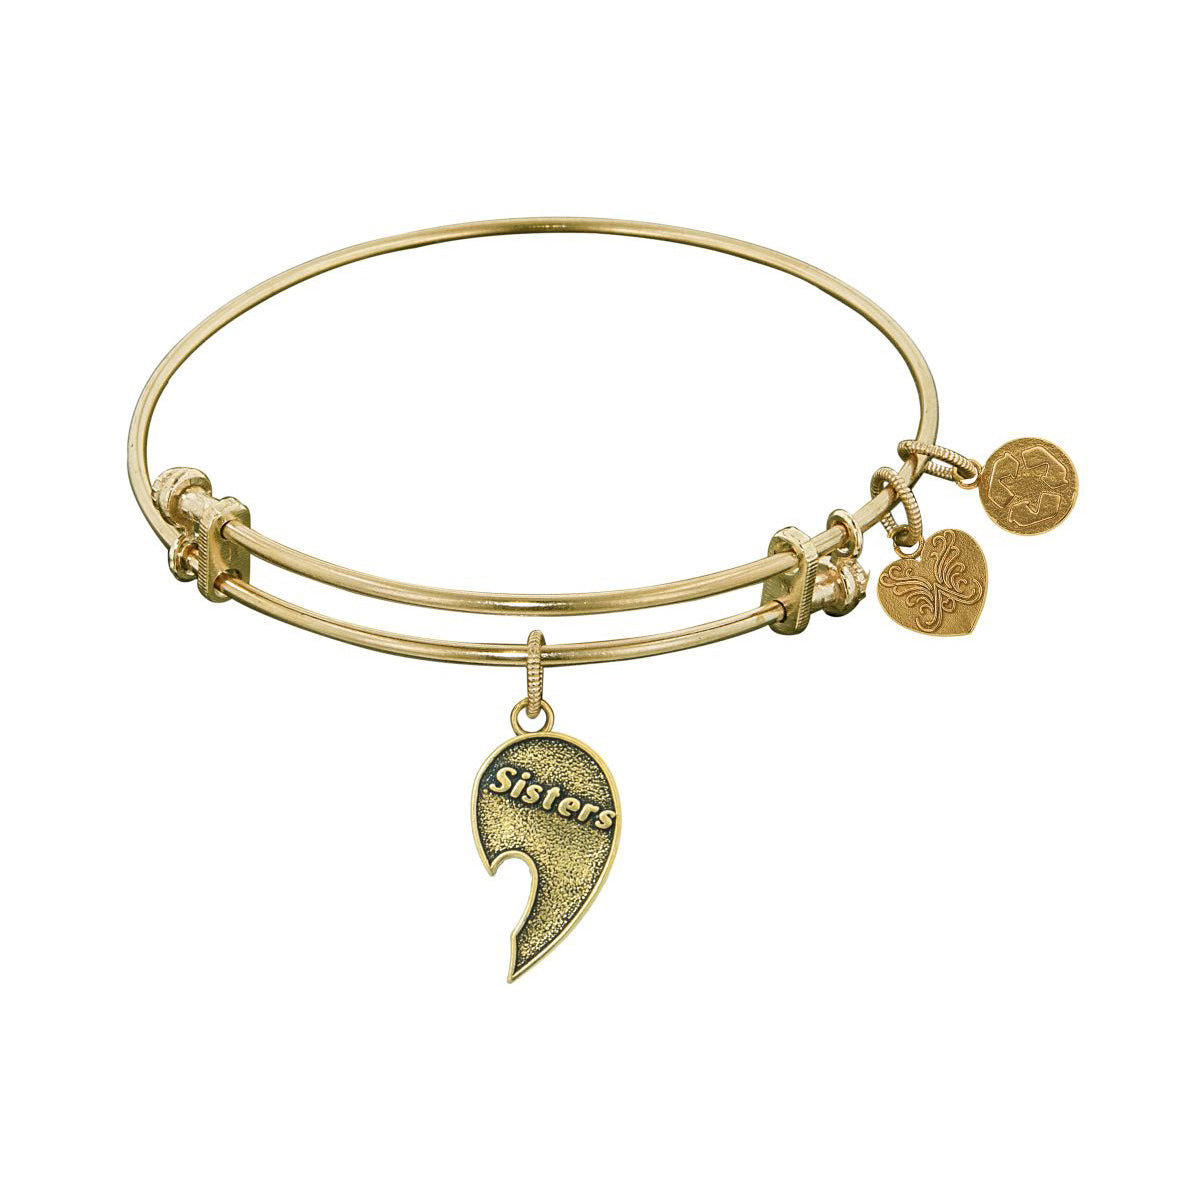 Stipple Finish Brass Right-Half Heart Sisters Angelica Bangle Bracelet, 7.25" fine designer jewelry for men and women